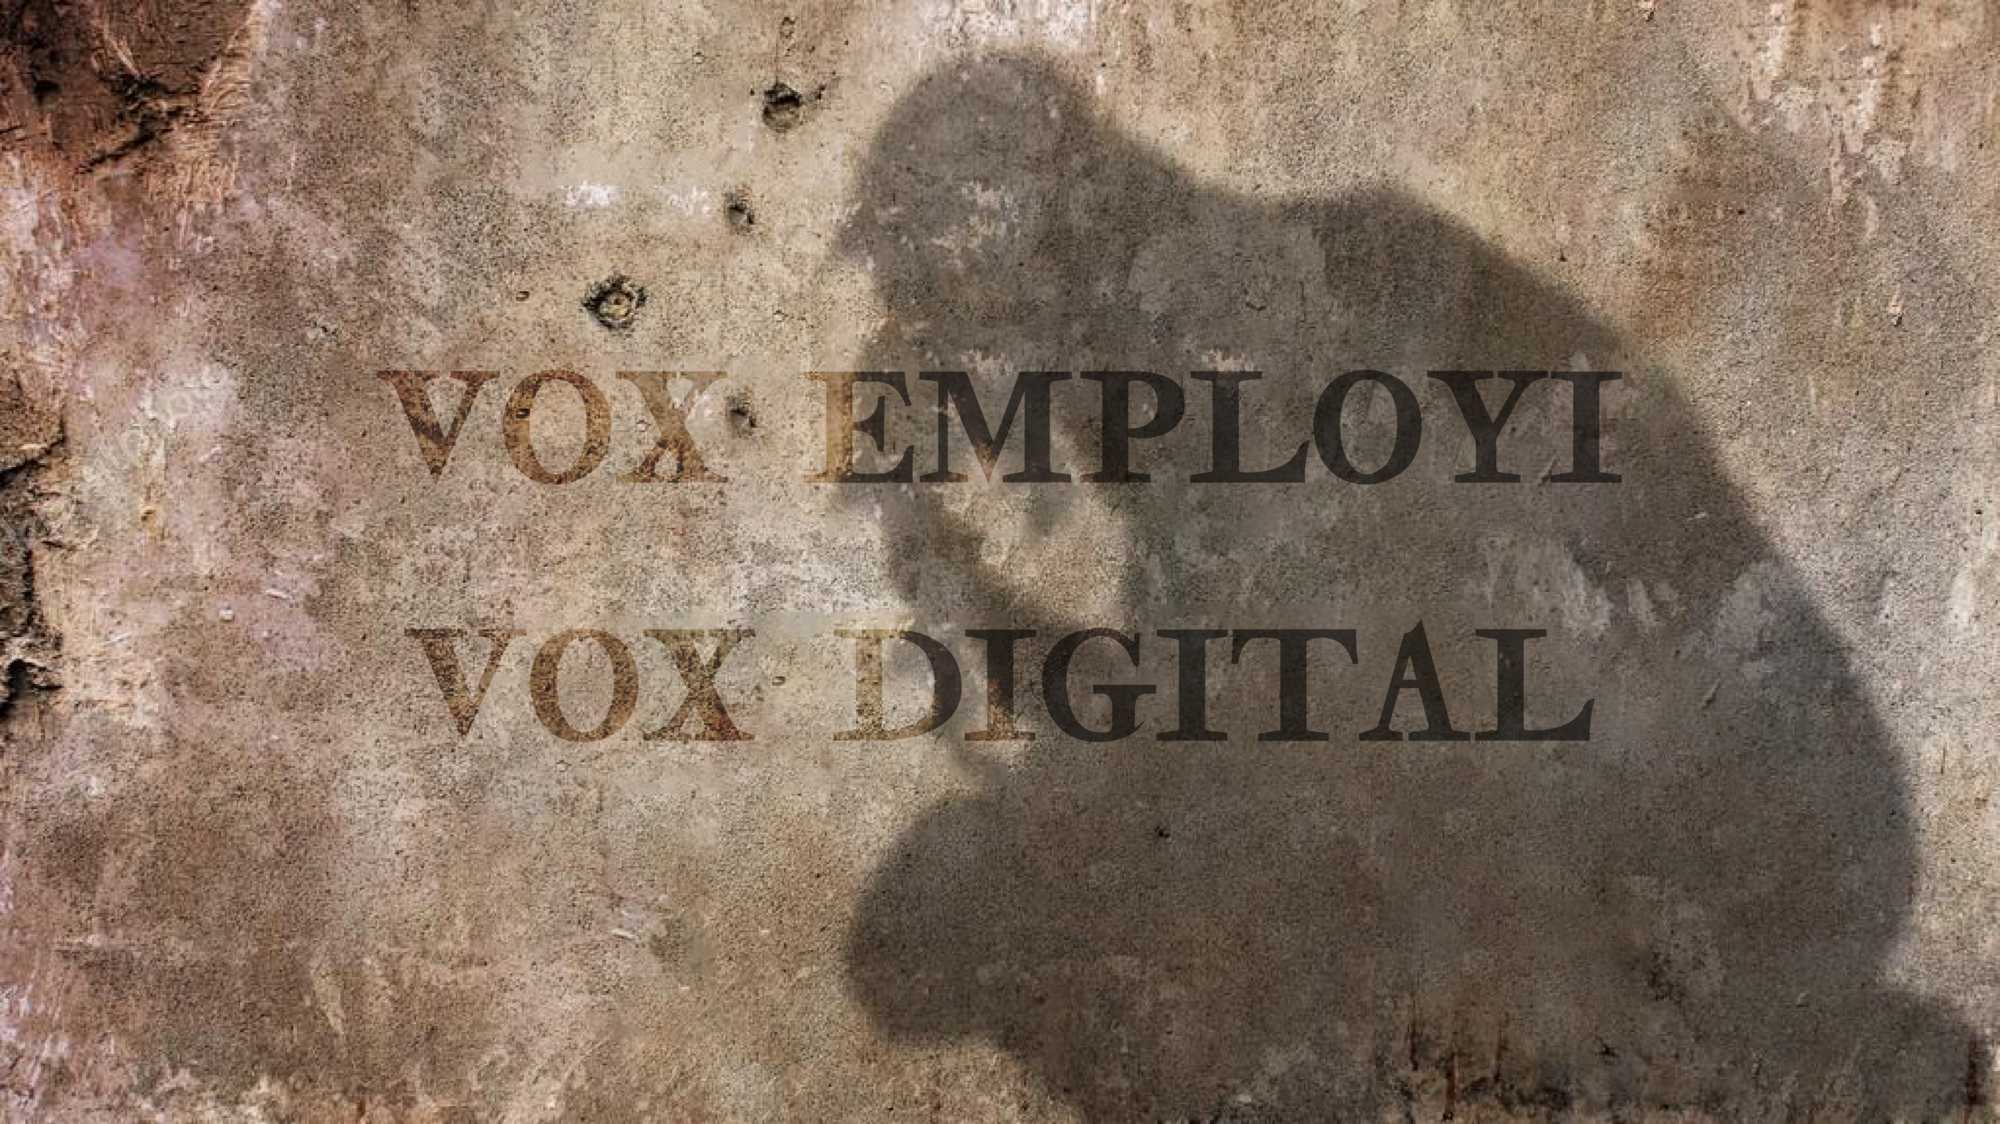 Vox Employi - Vox Digital